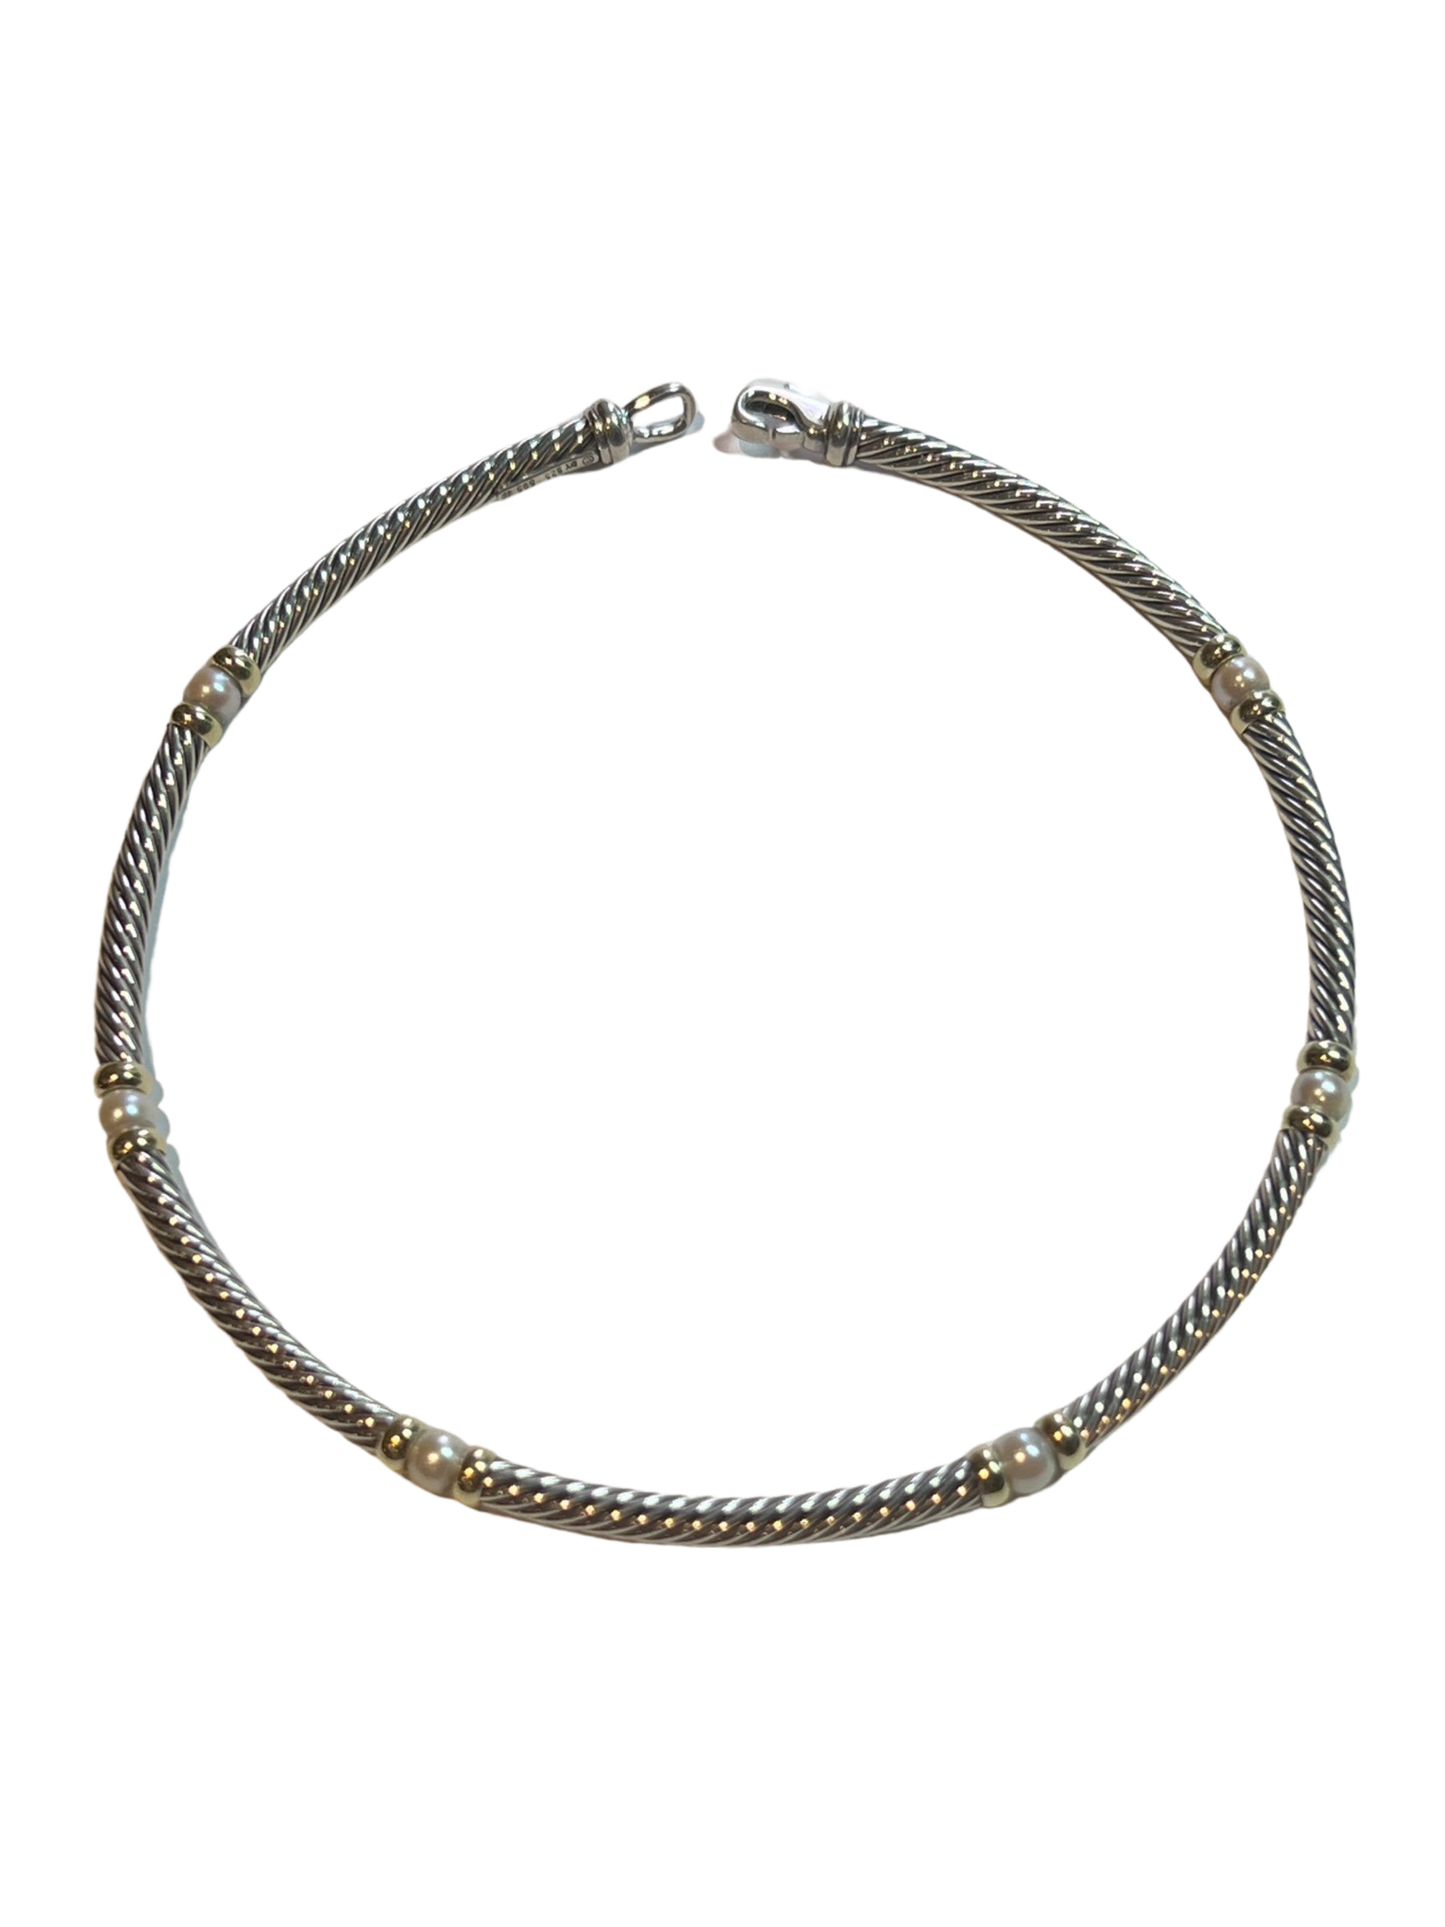 David Yurman Authentic Estate Pearl Necklace 17" + Bracelet Set 7.5" Silver + 14k Gold DY310 - Certified Fine Jewelry